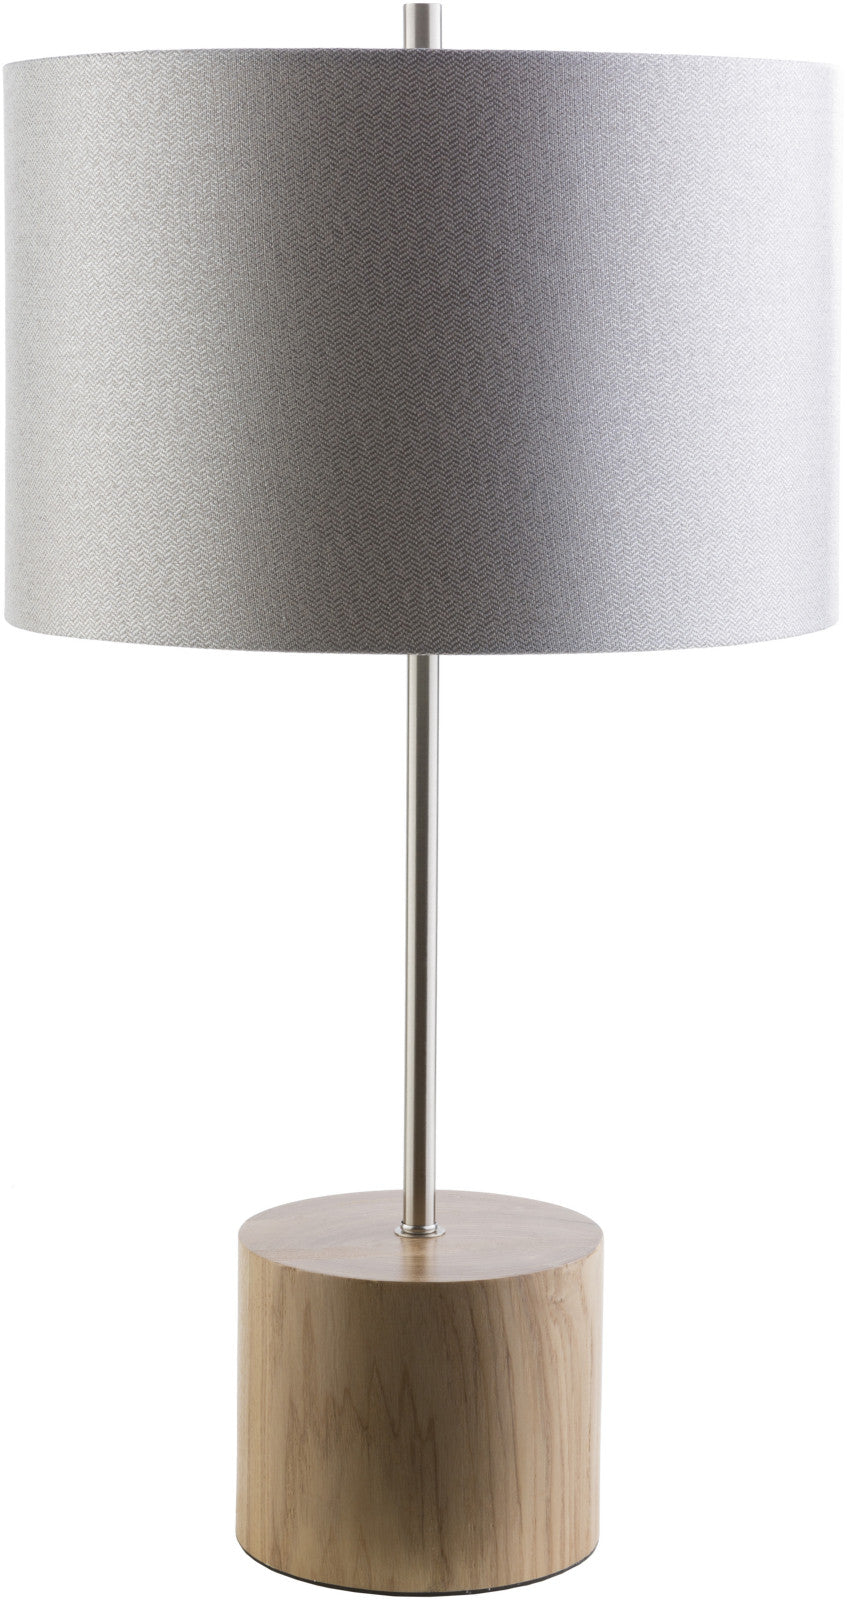 Surya Kingsley KGY-511 Gray Lamp Table Lamp